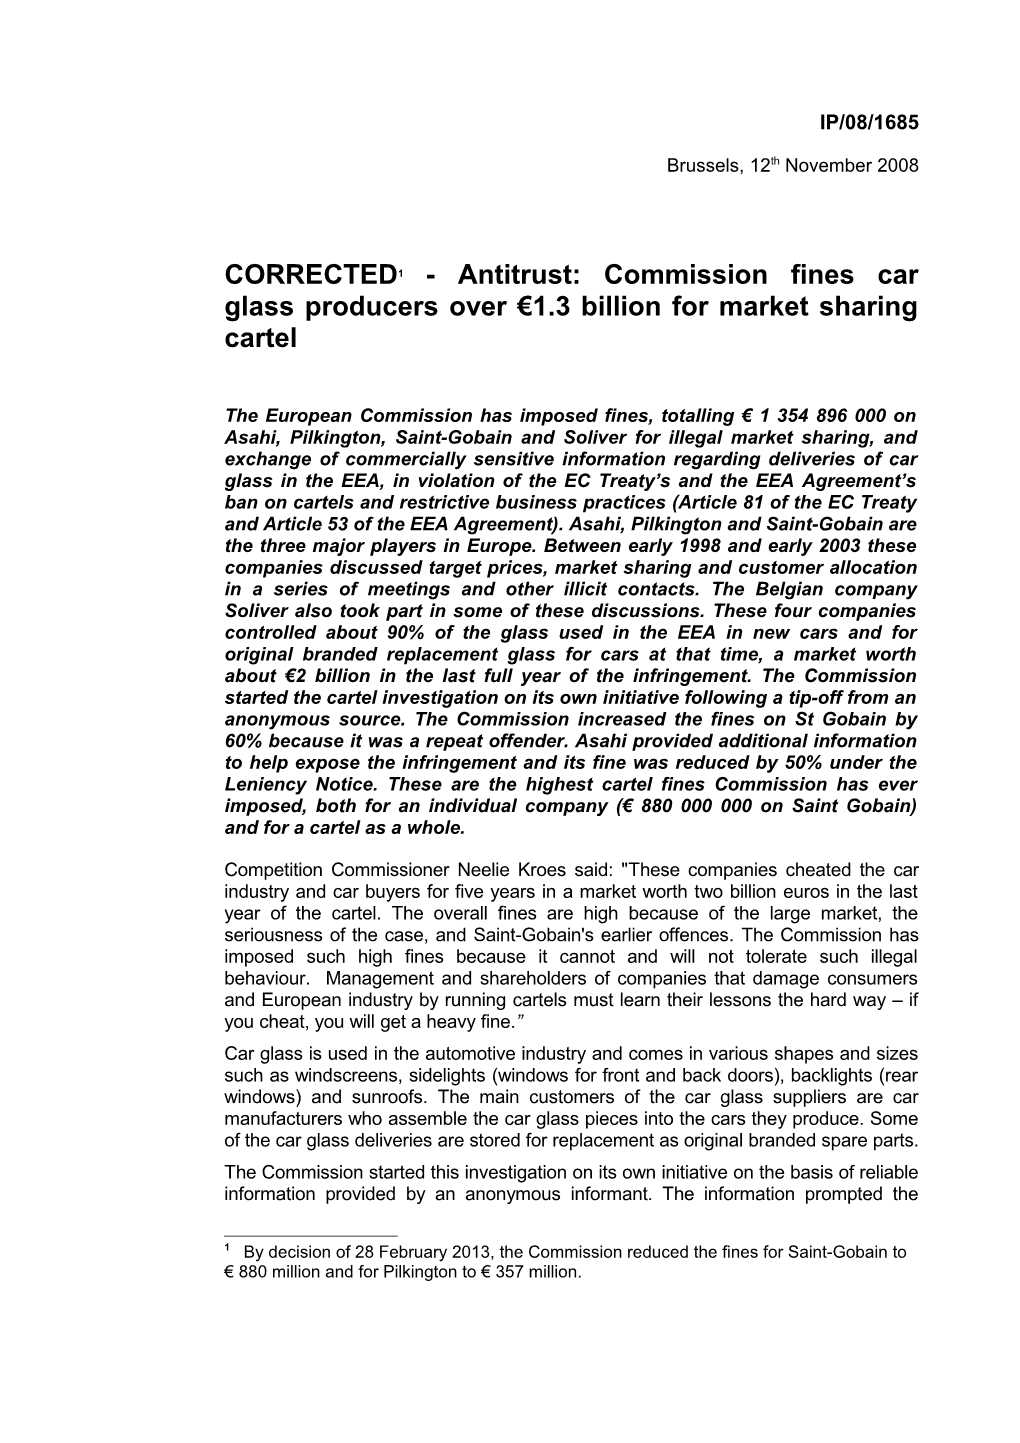 CORRECTED 1 - Antitrust: Commission Fines Car Glass Producers Over 1.3 Billion for Market